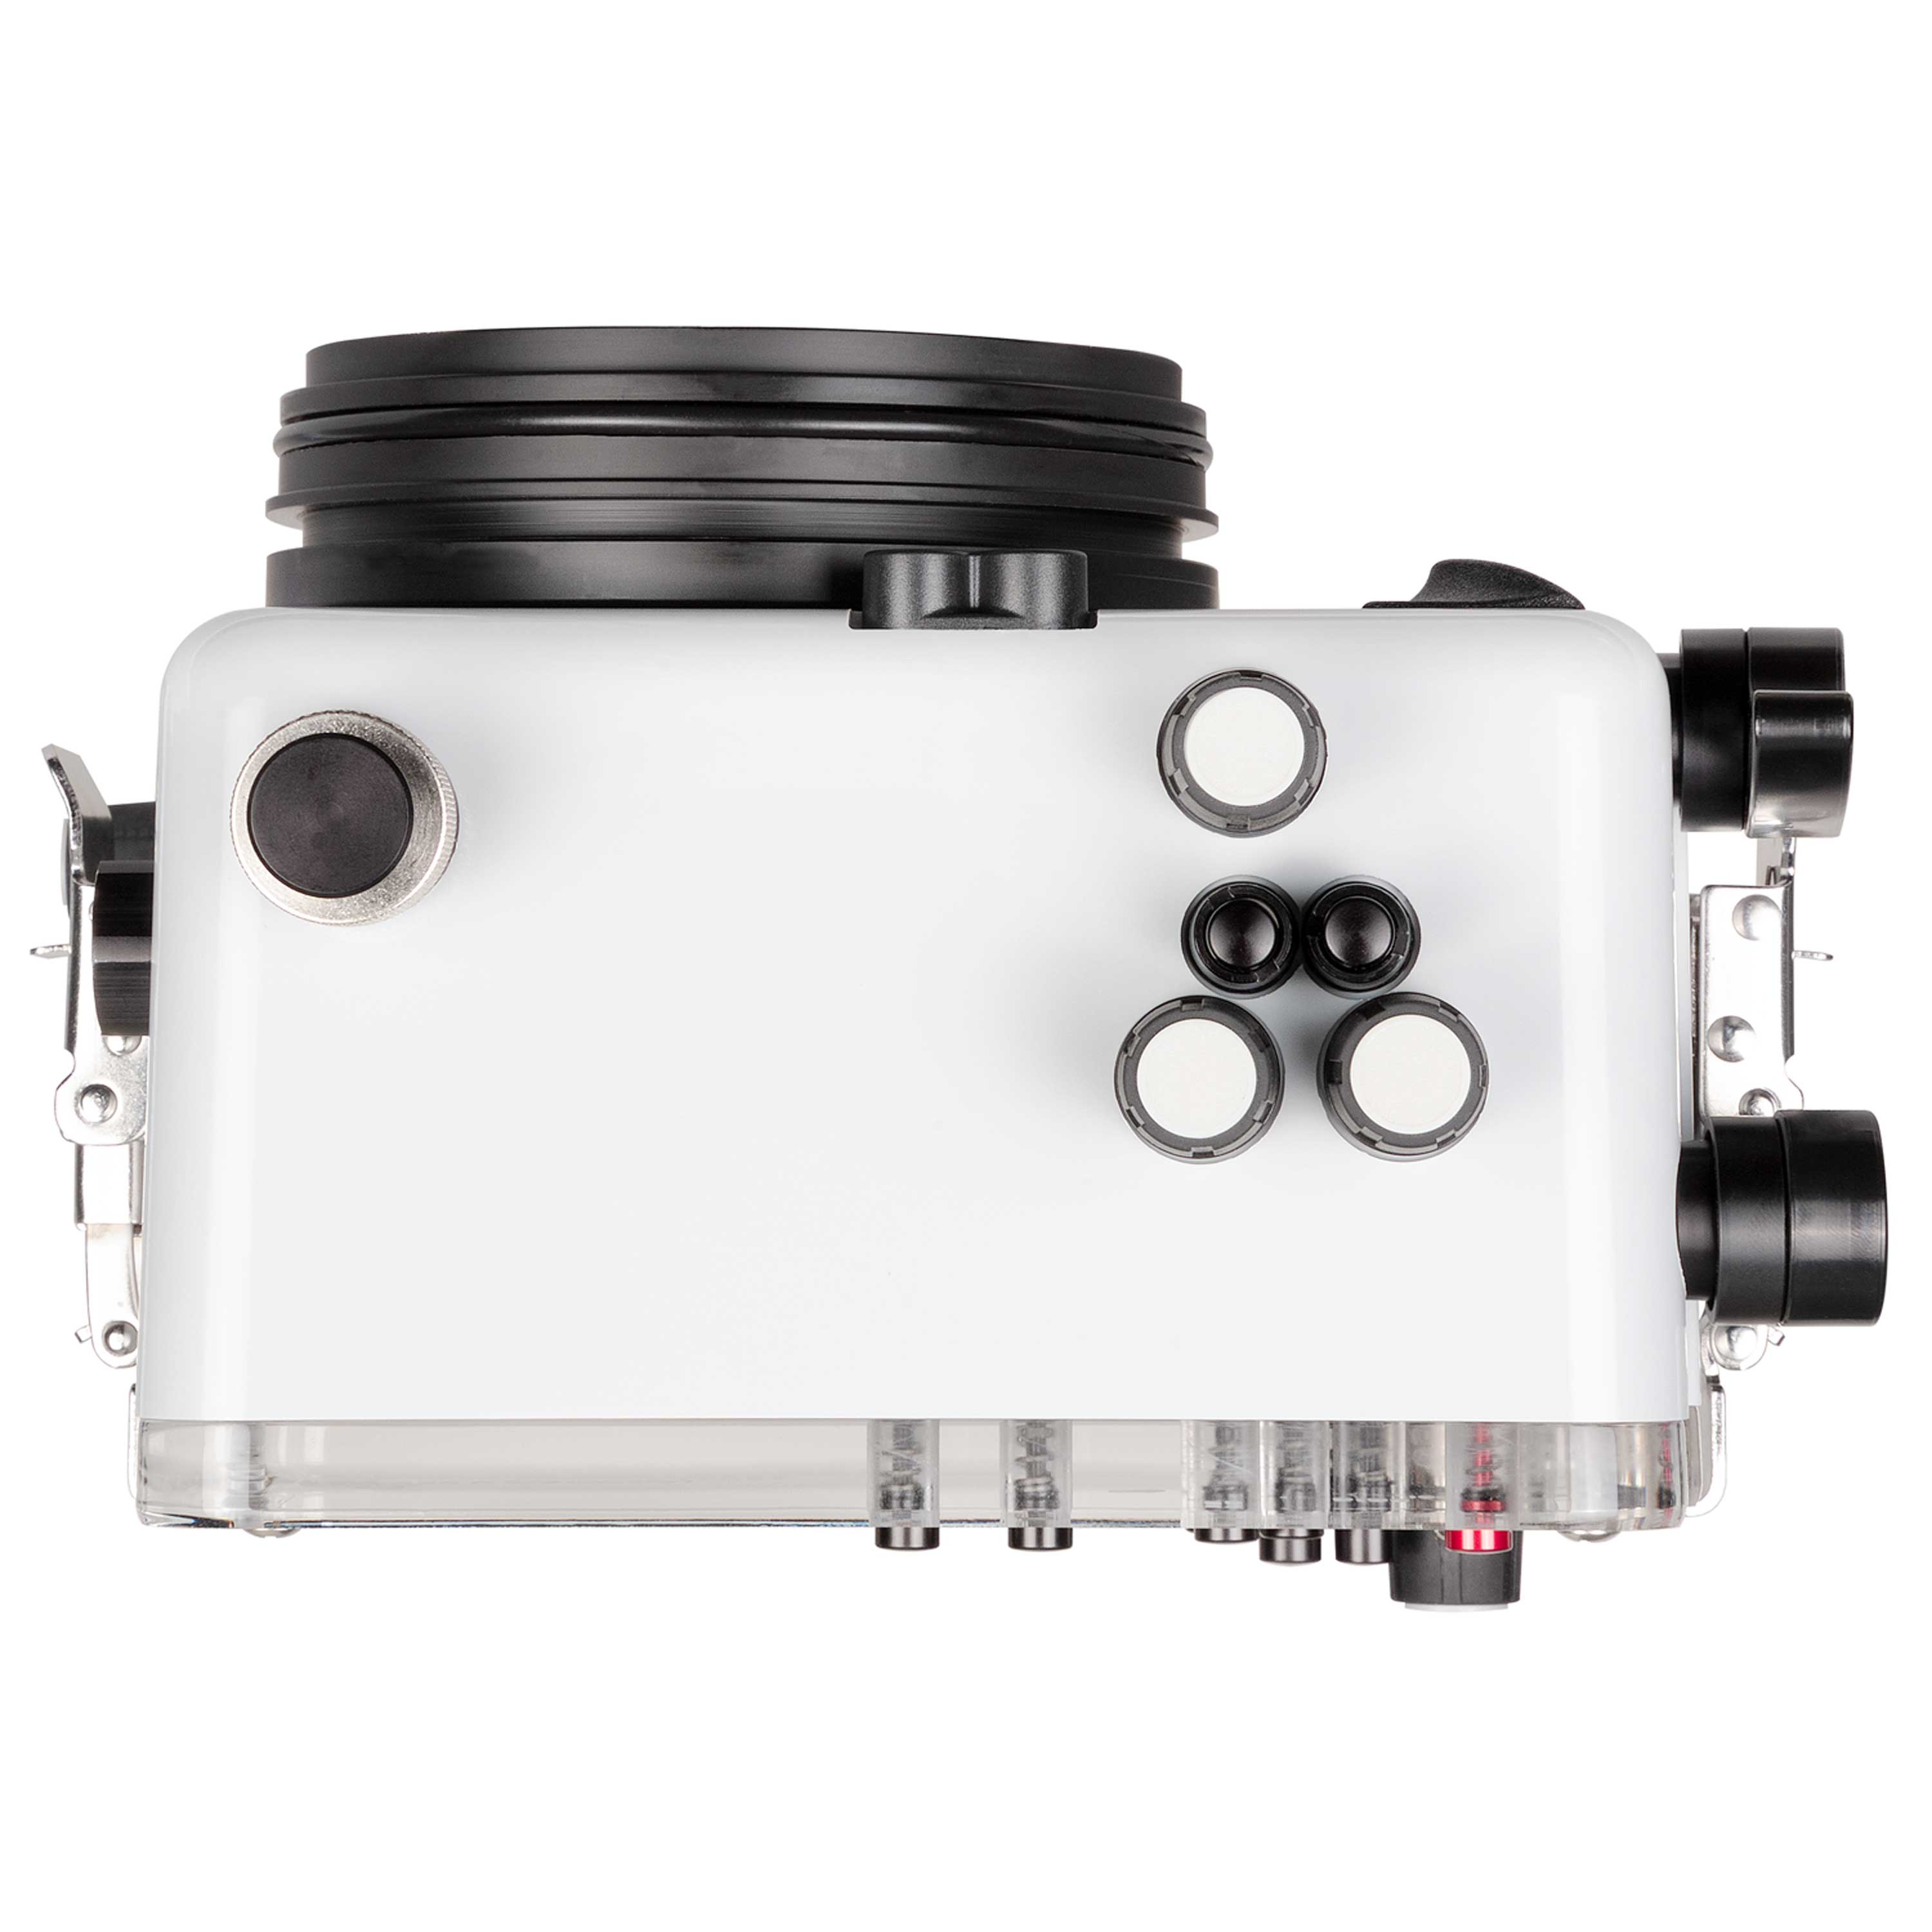 200DLM/A Underwater TTL Housing for Sony Alpha A6500 Mirrorless Camera